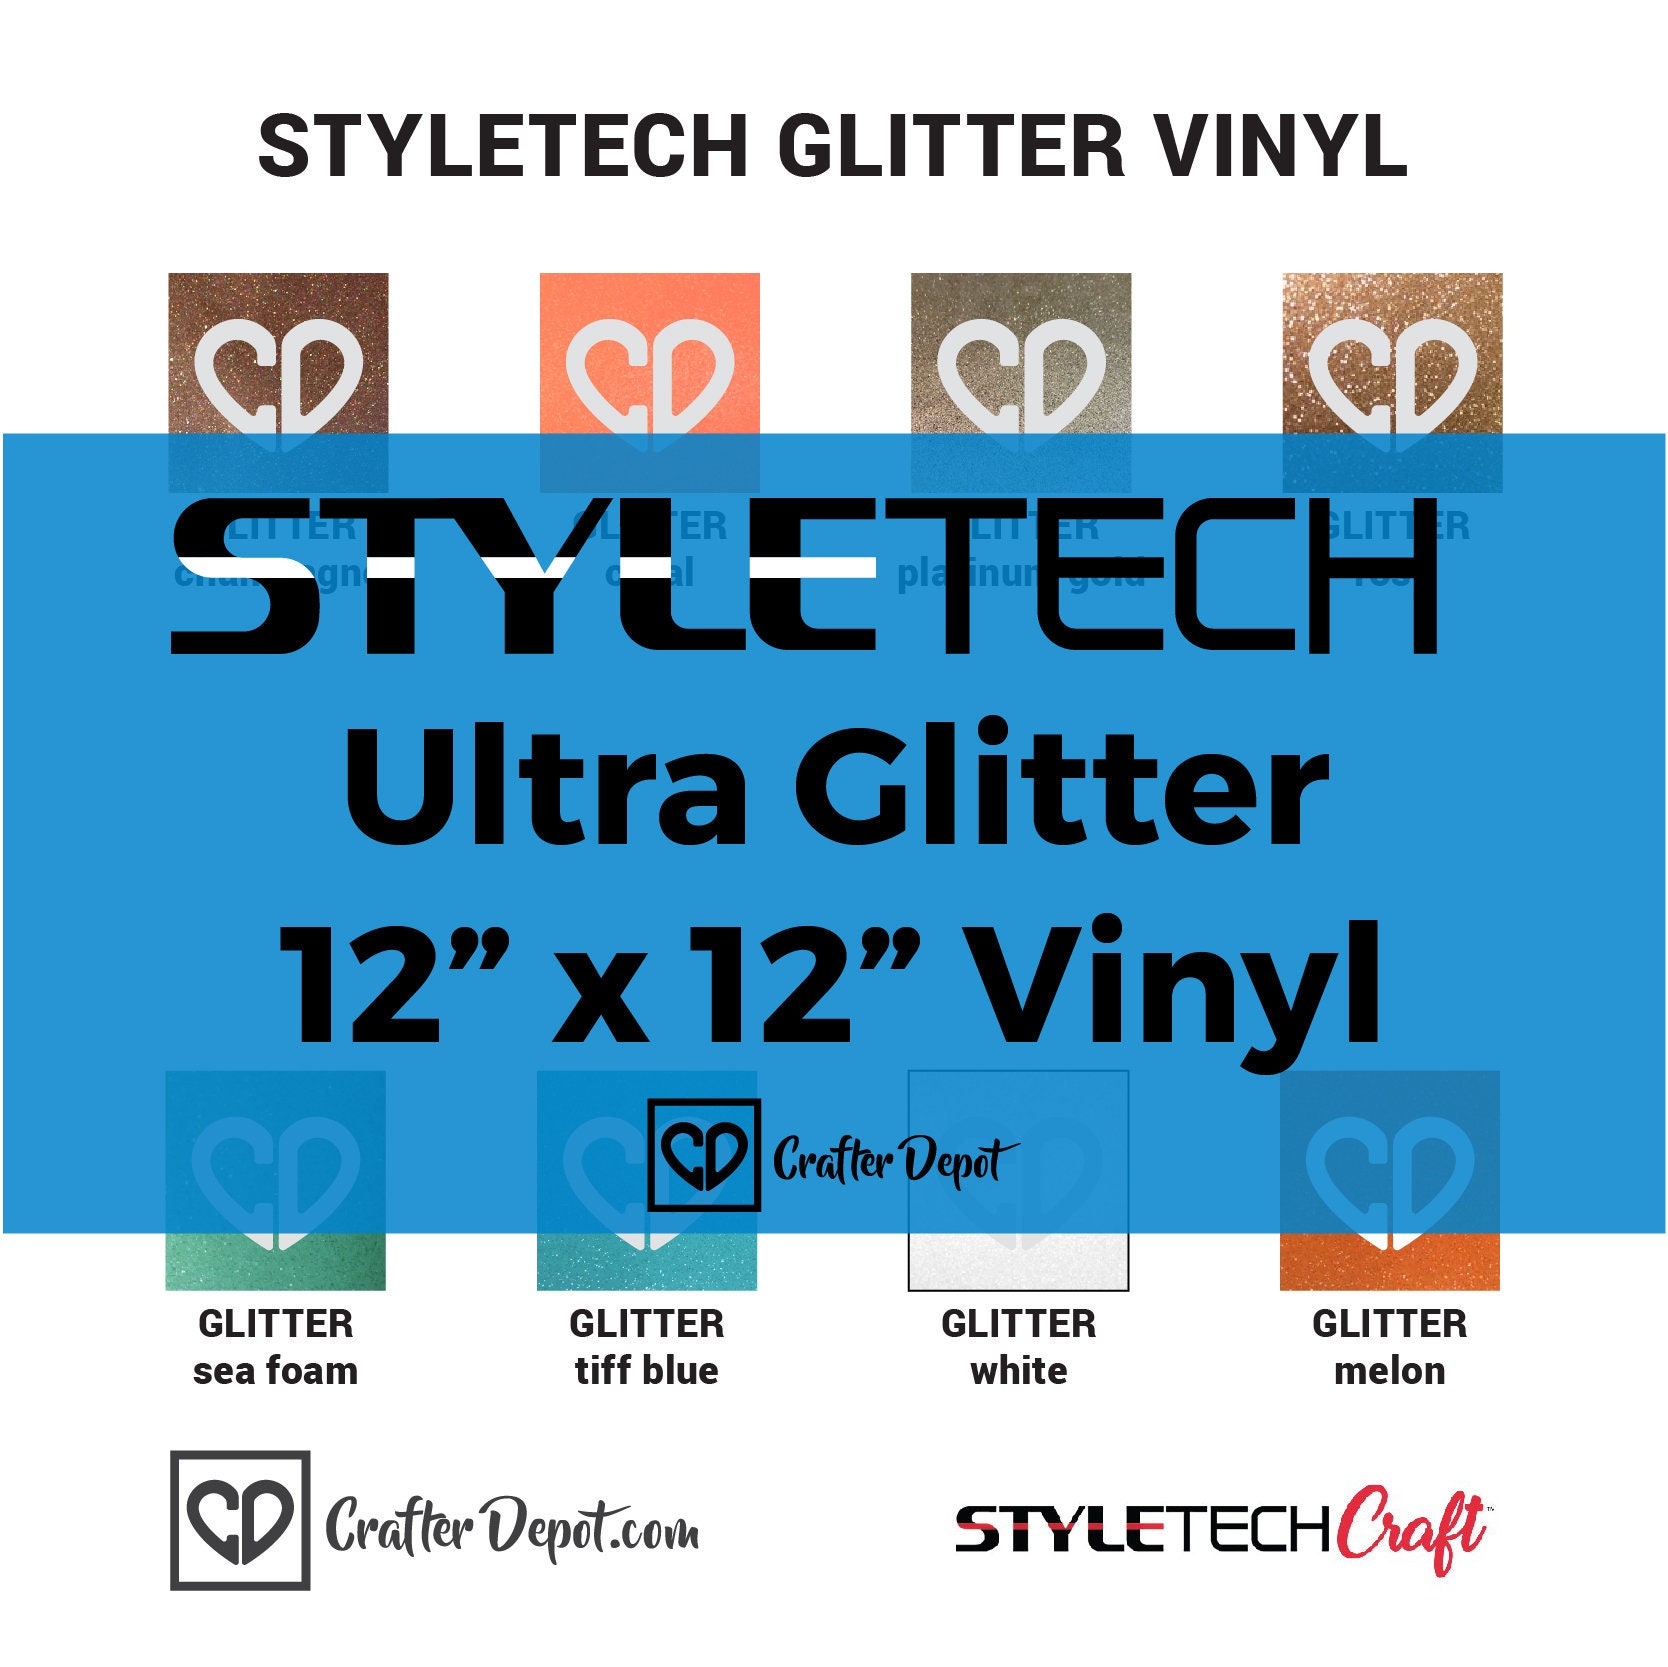 Glitter Adhesive Vinyl Sample Pack 6 Sheets 3x12 Oracal 651 Equivalent  Decal Vinyl Vinyl Sampler Glitter Vinyl Permanent Outdoor Vinyl 